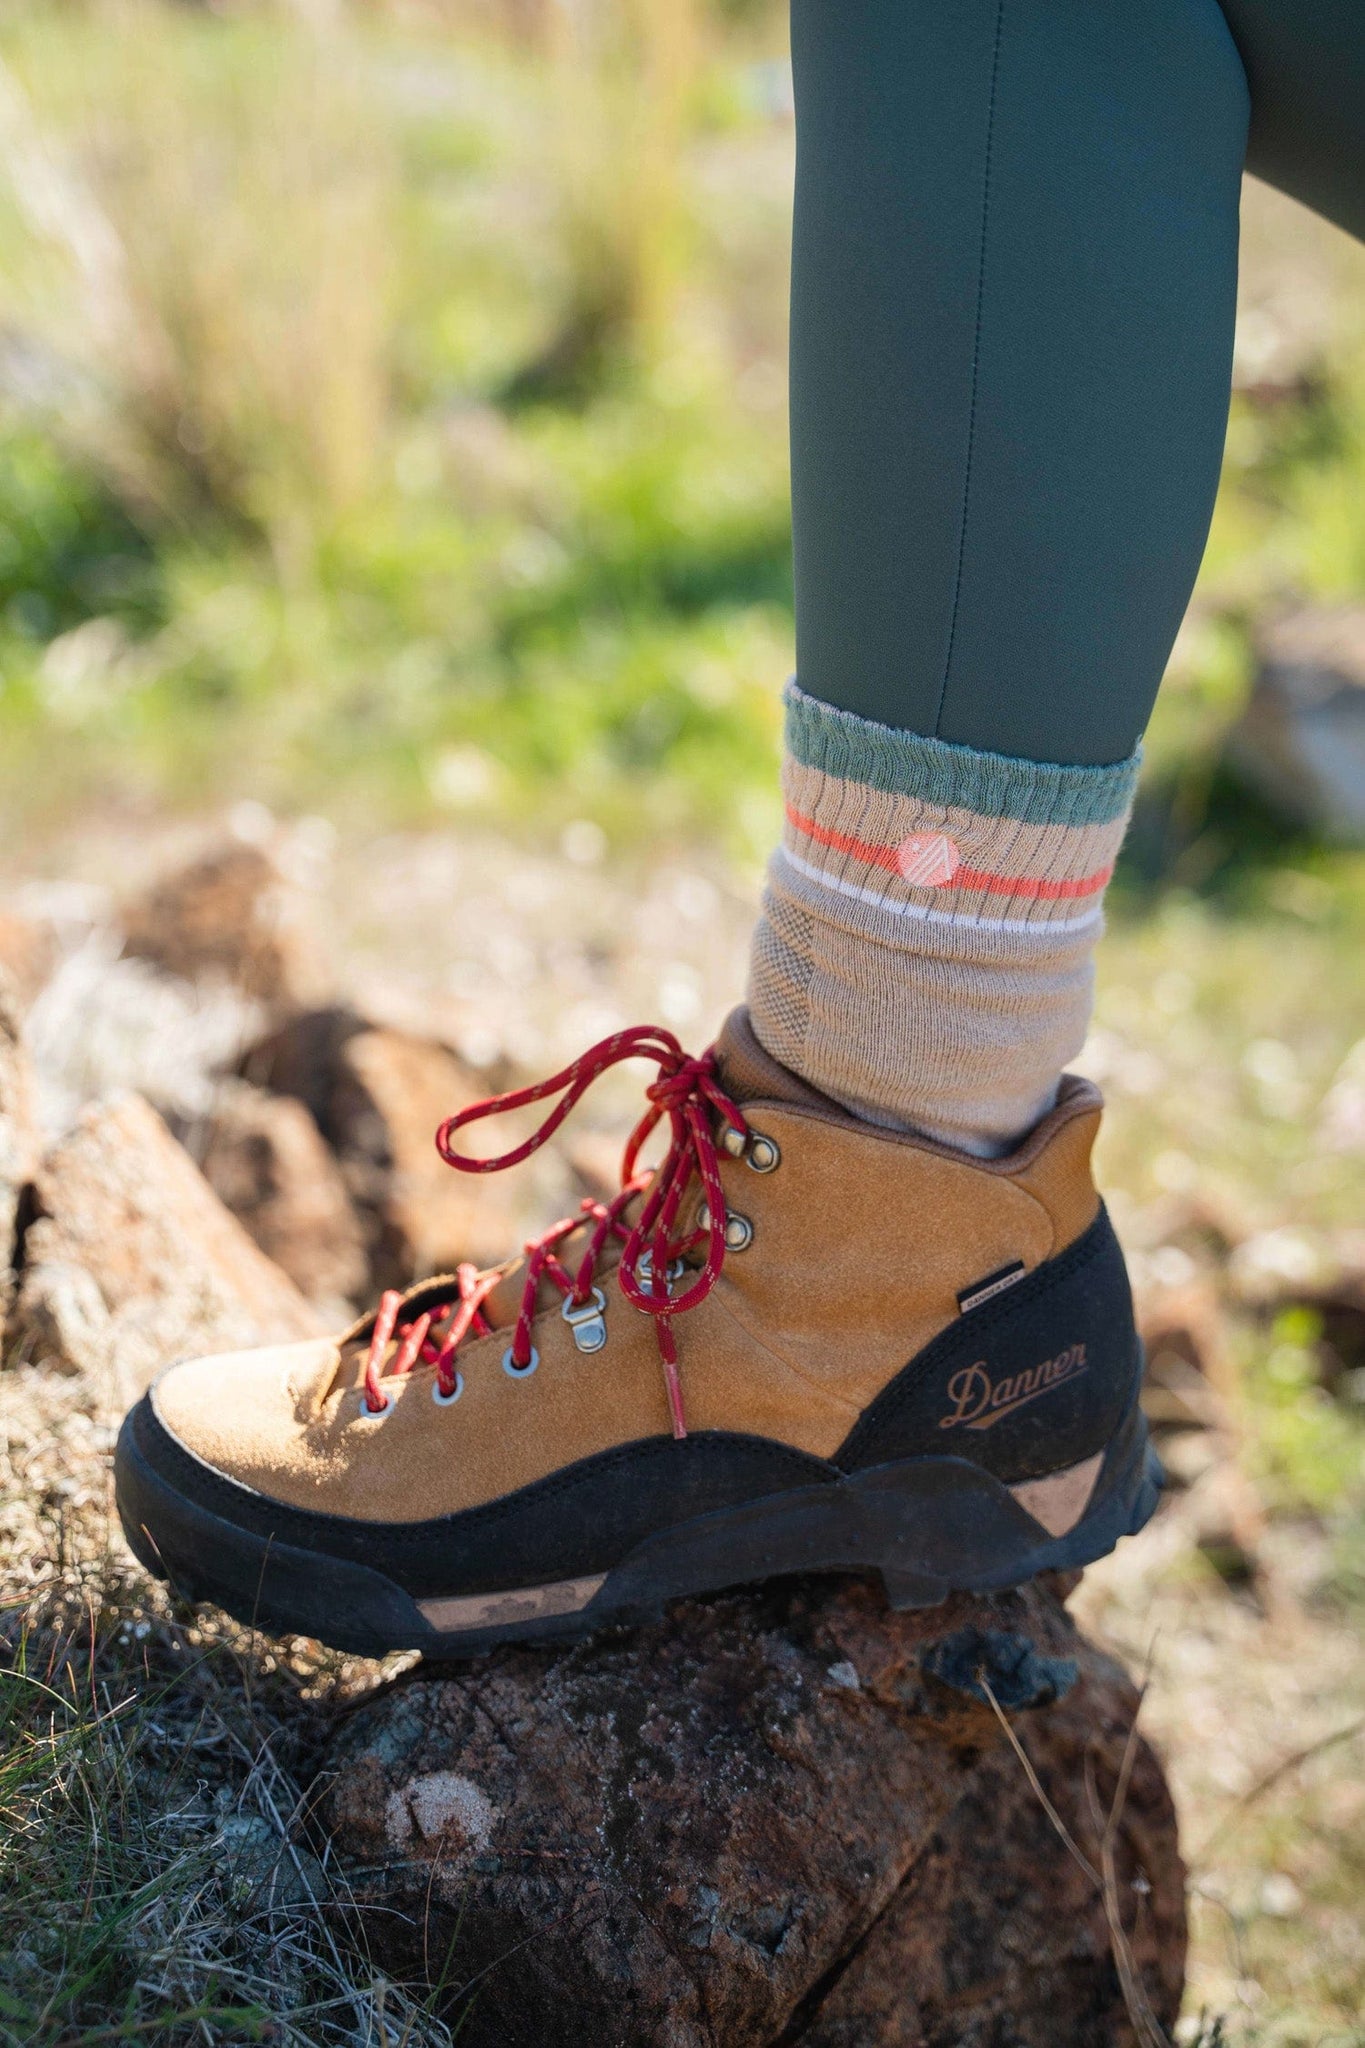 Bamboo Hiking Socks - Lily Pad Stripe Socks  